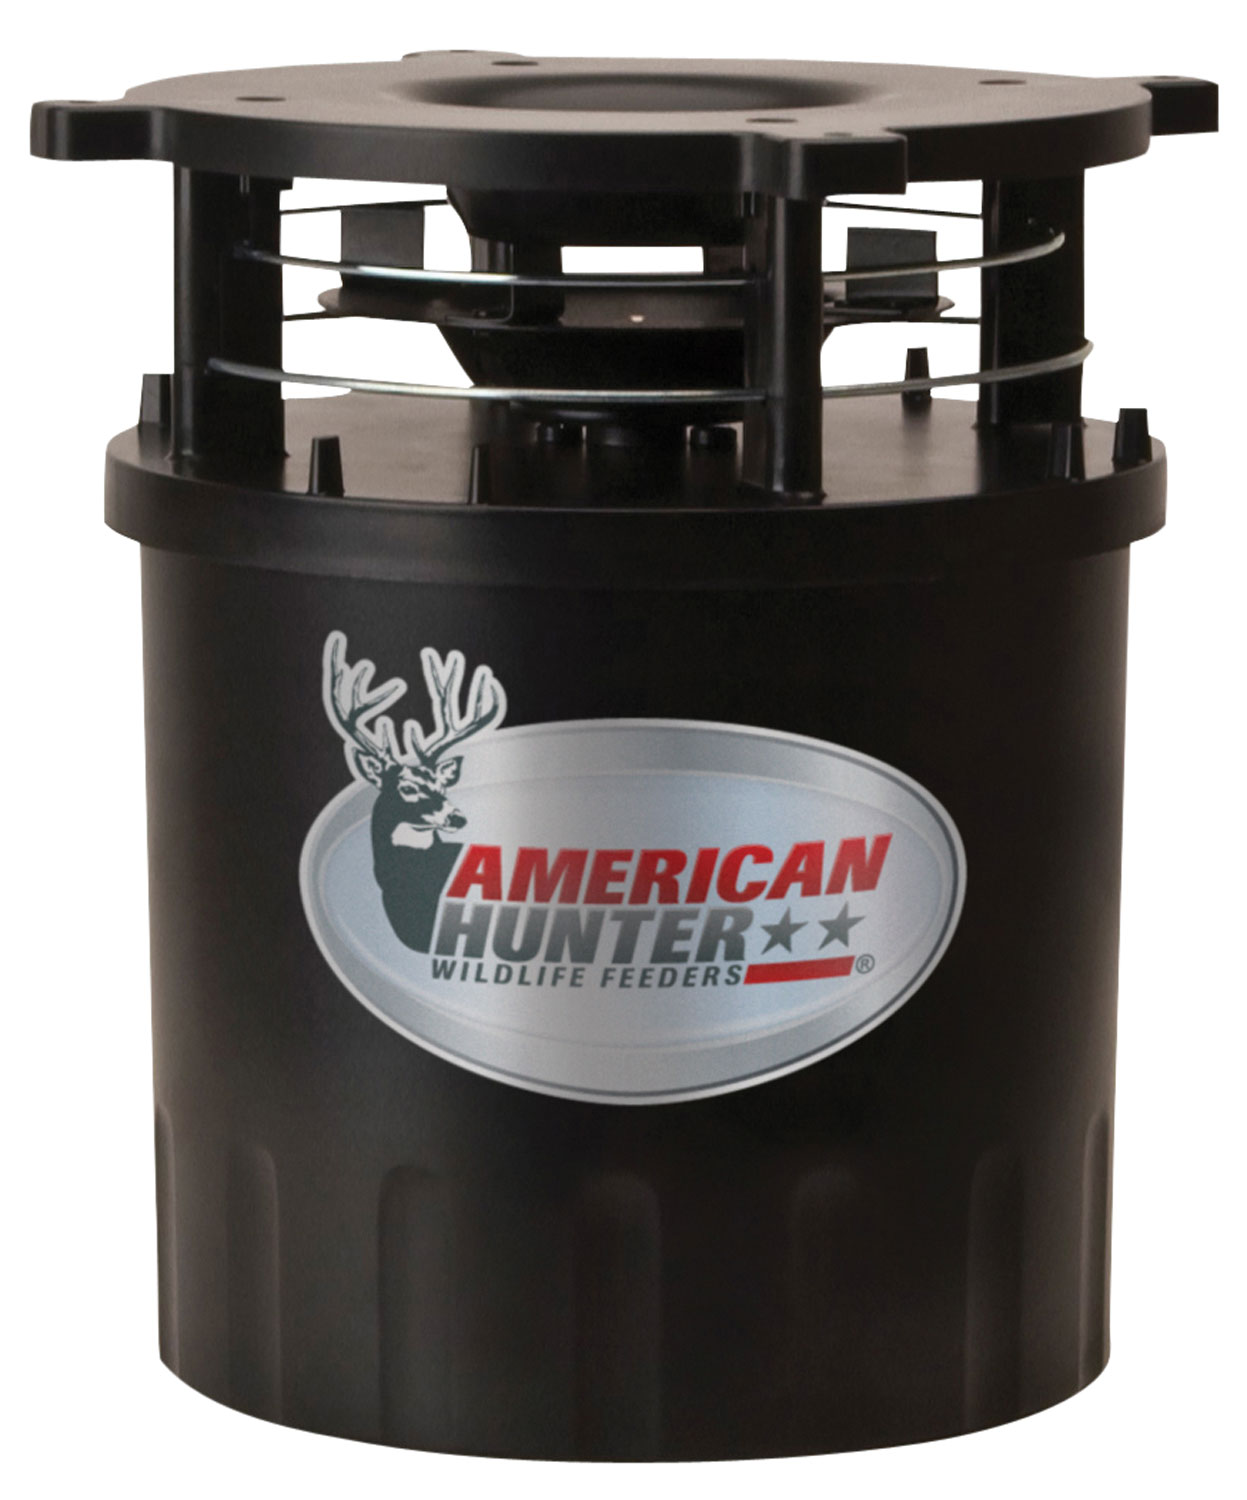 American Hunter 30591 RD-Pro Feeder Kit 24 Programs 1-30 Seconds Duration Black Powder Coated Features Digital Clock Timer & Varmint Guard